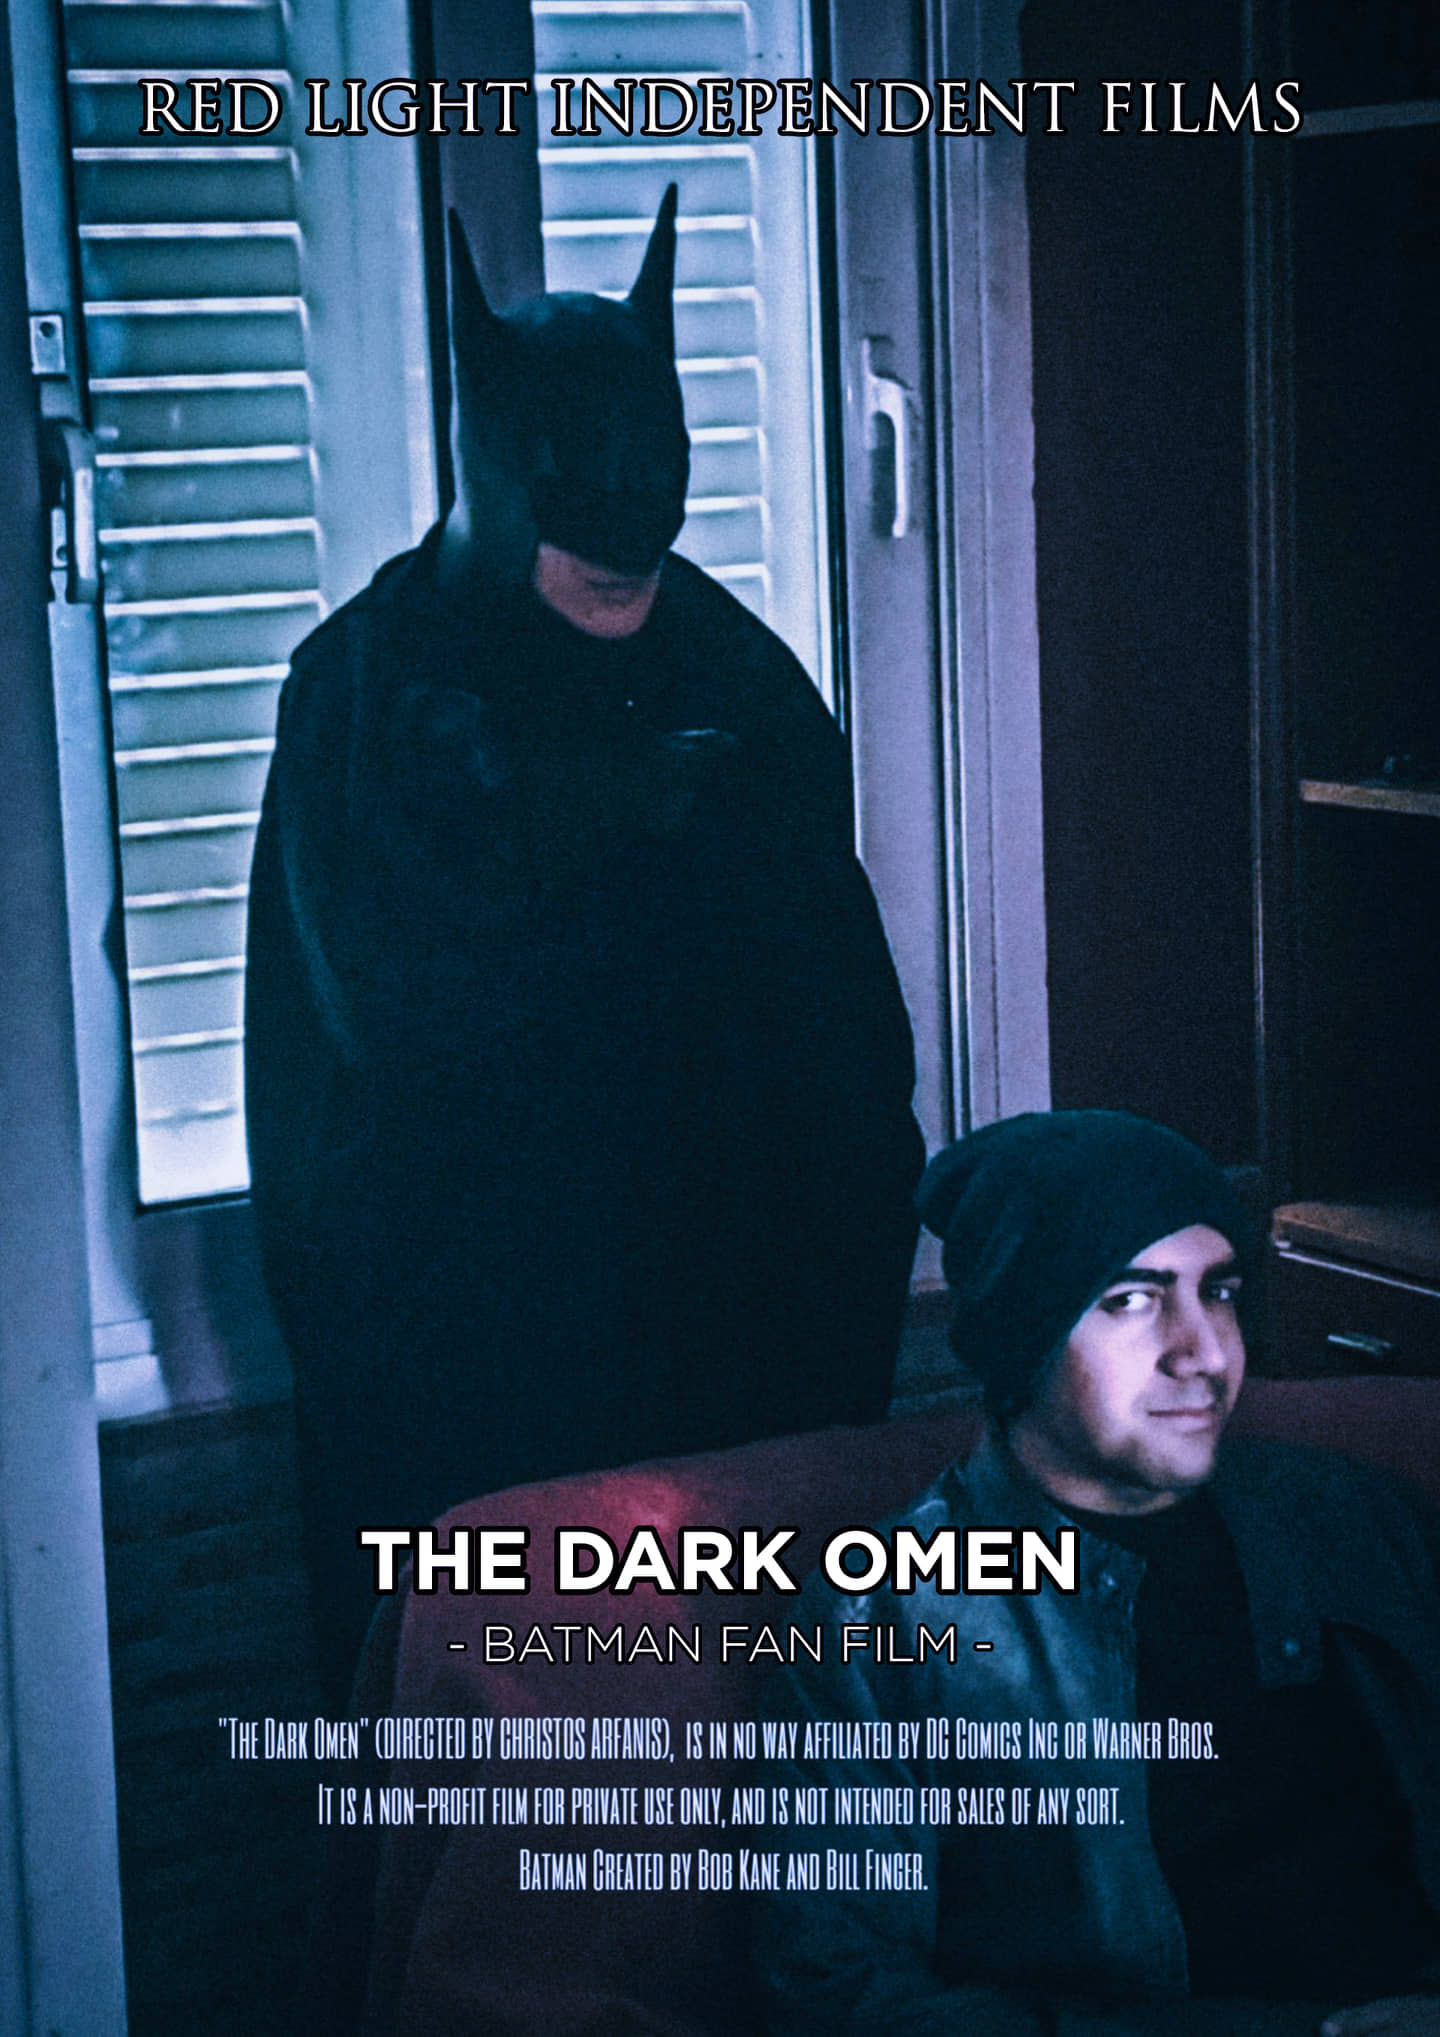 The Dark Omen - Unauthorized Fan Film